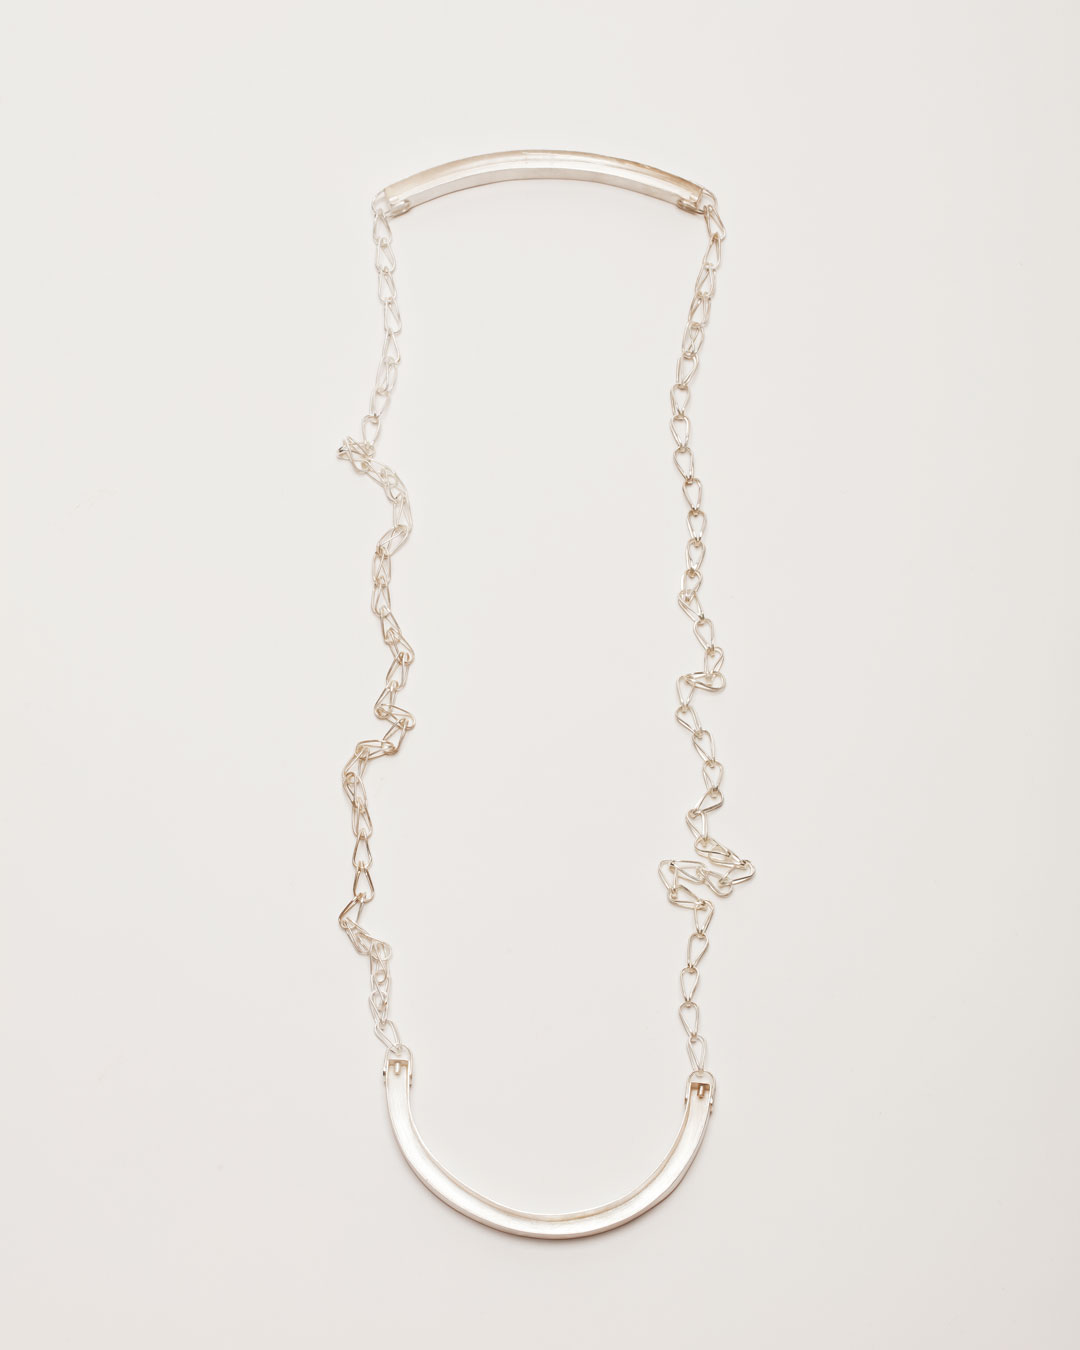 Christine Matthias, untitled, 2016, necklace; silver, L 1250 mm, €2550